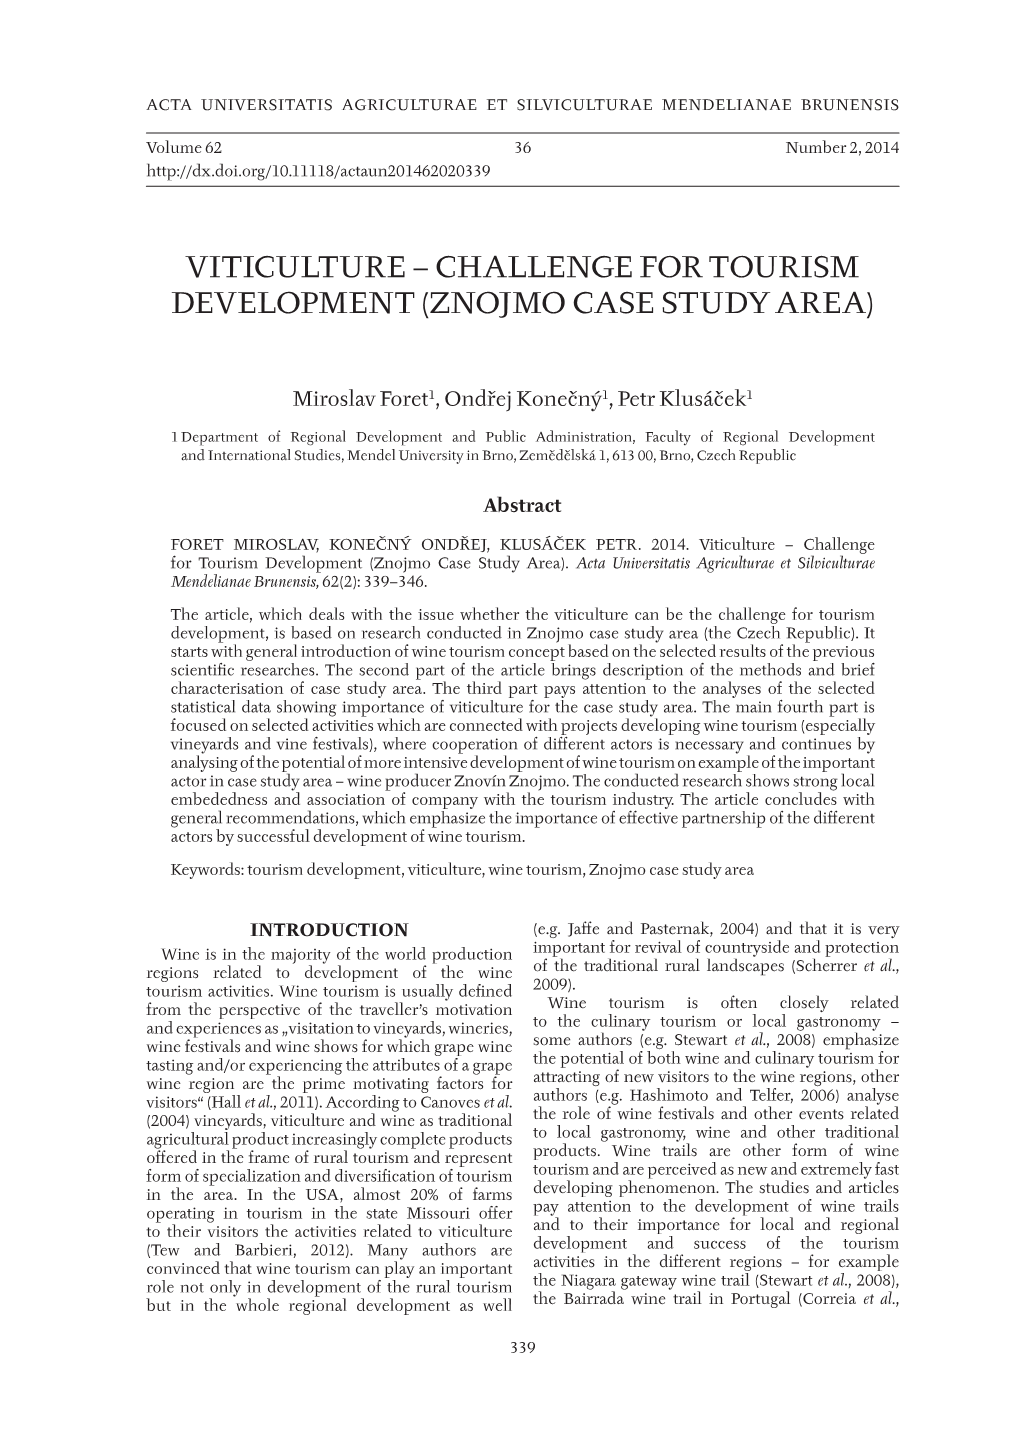 Viticulture – Challenge for Tourism Development (Znojmo Case Study Area)